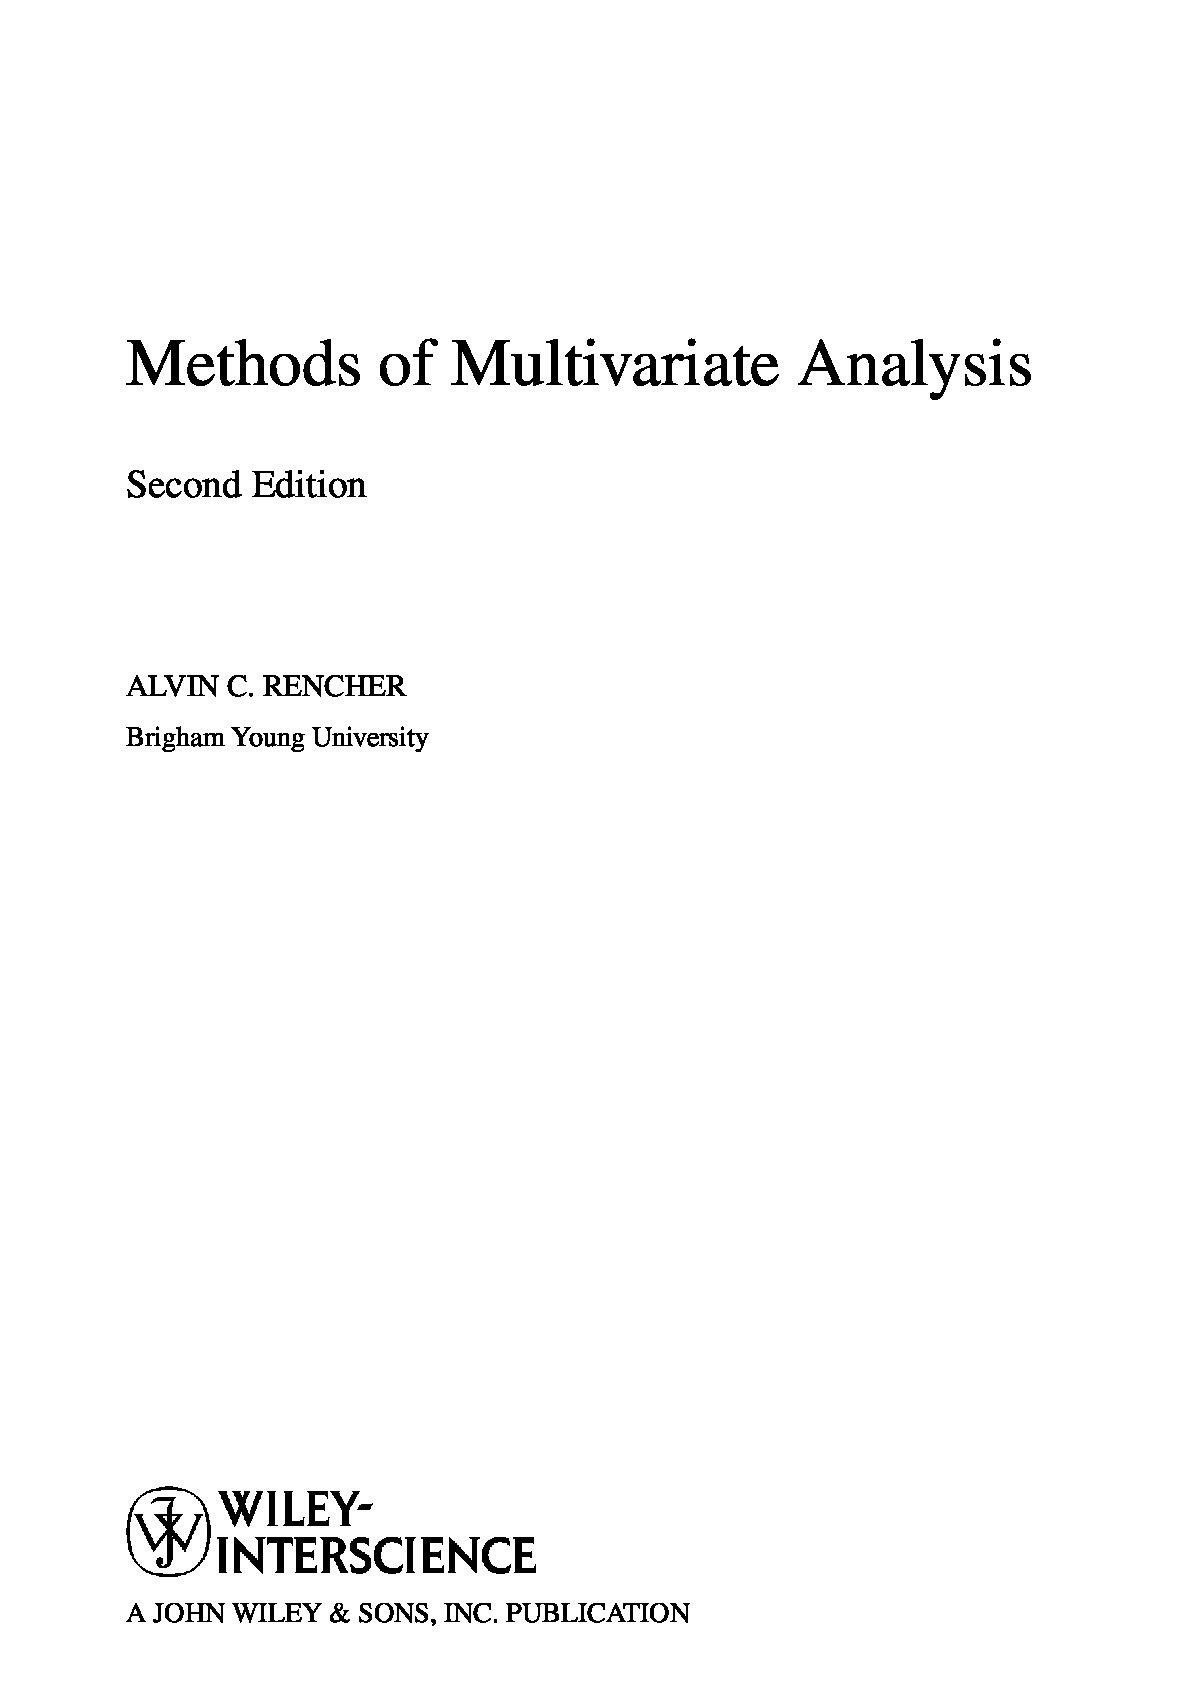 Methods_of_Multivariate_Analysis